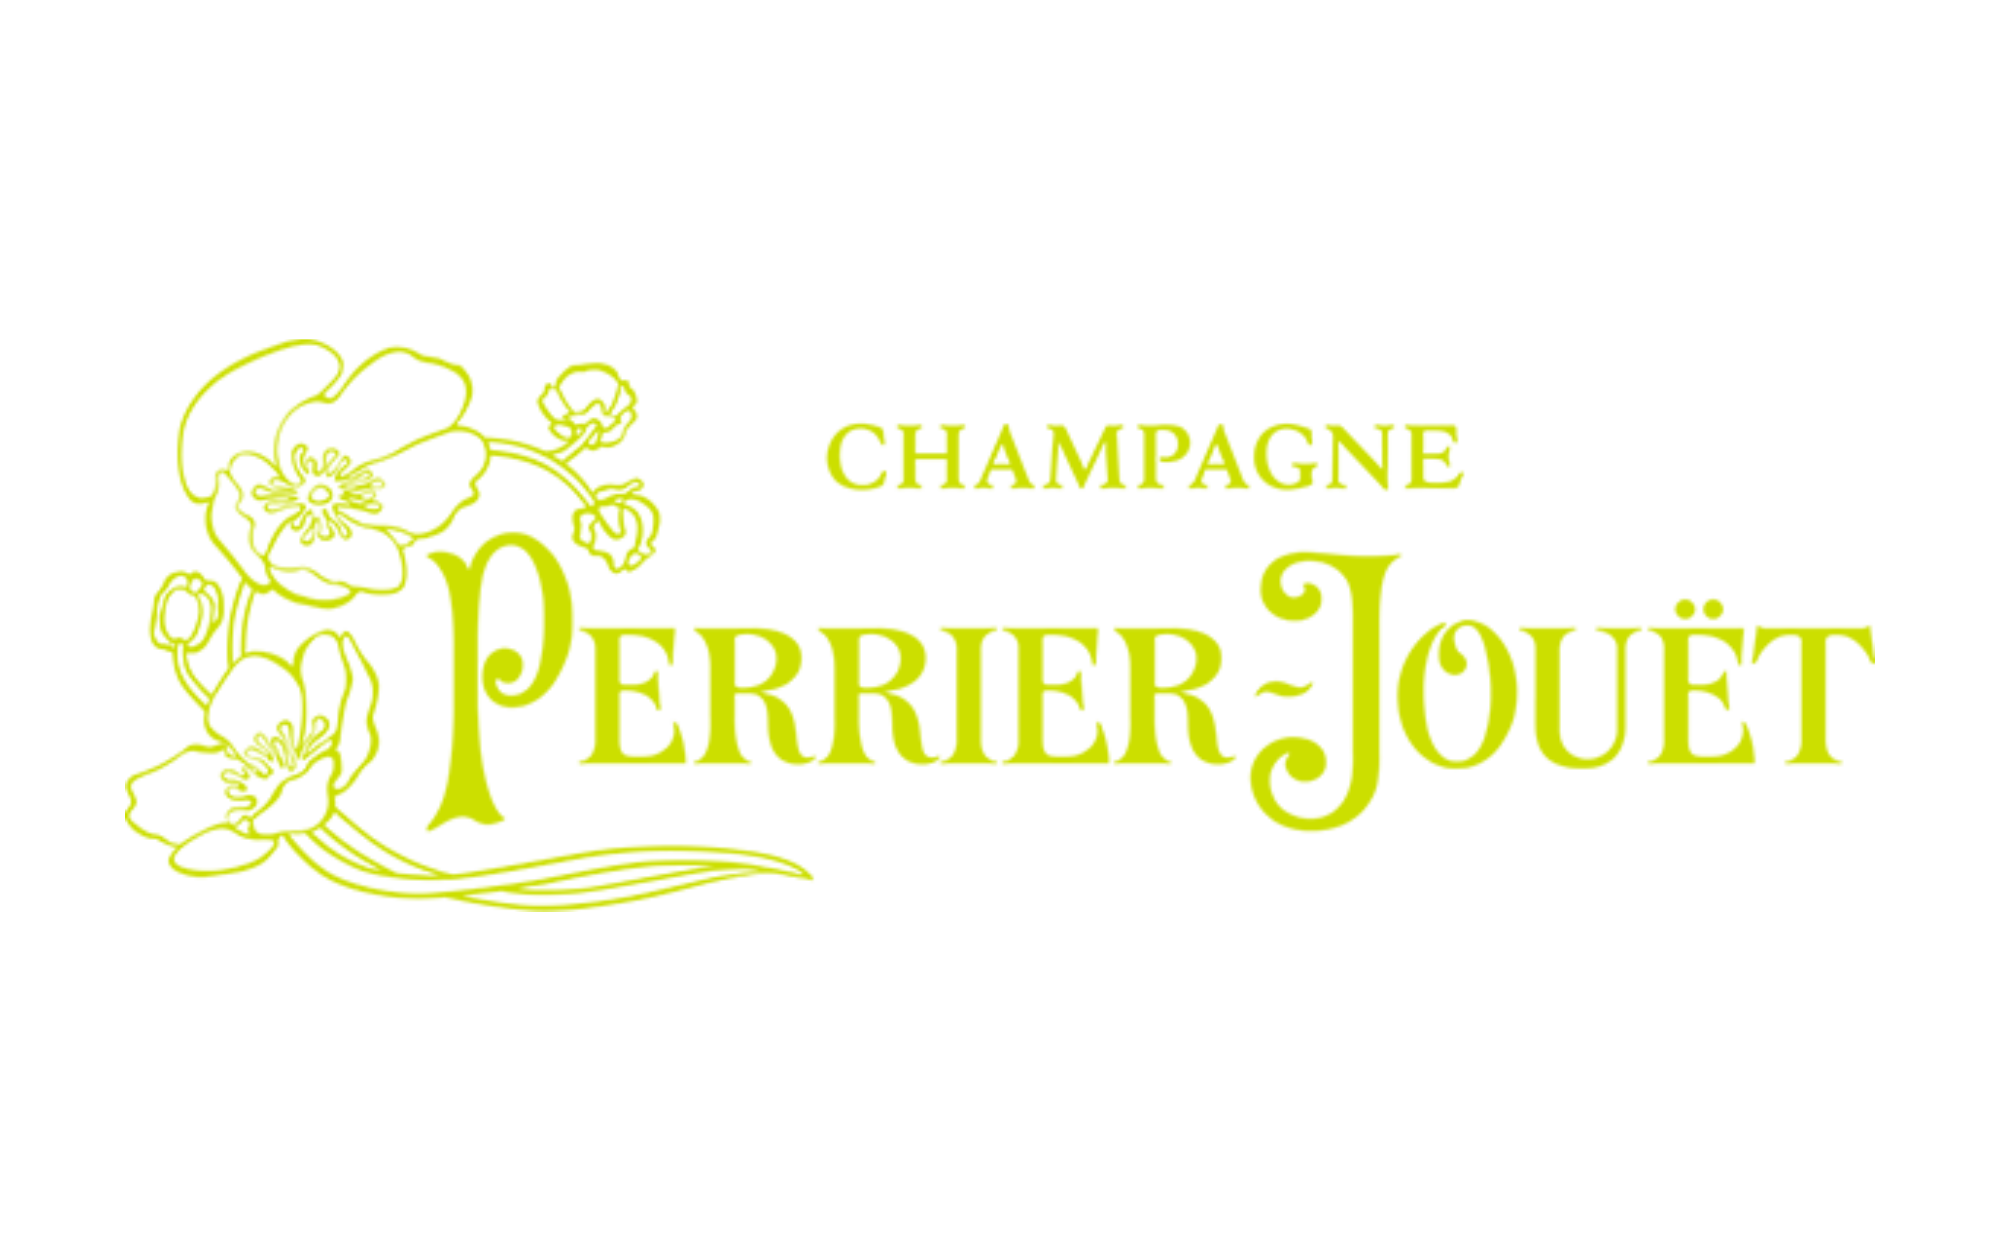 perrier-jouet-champagne-logo